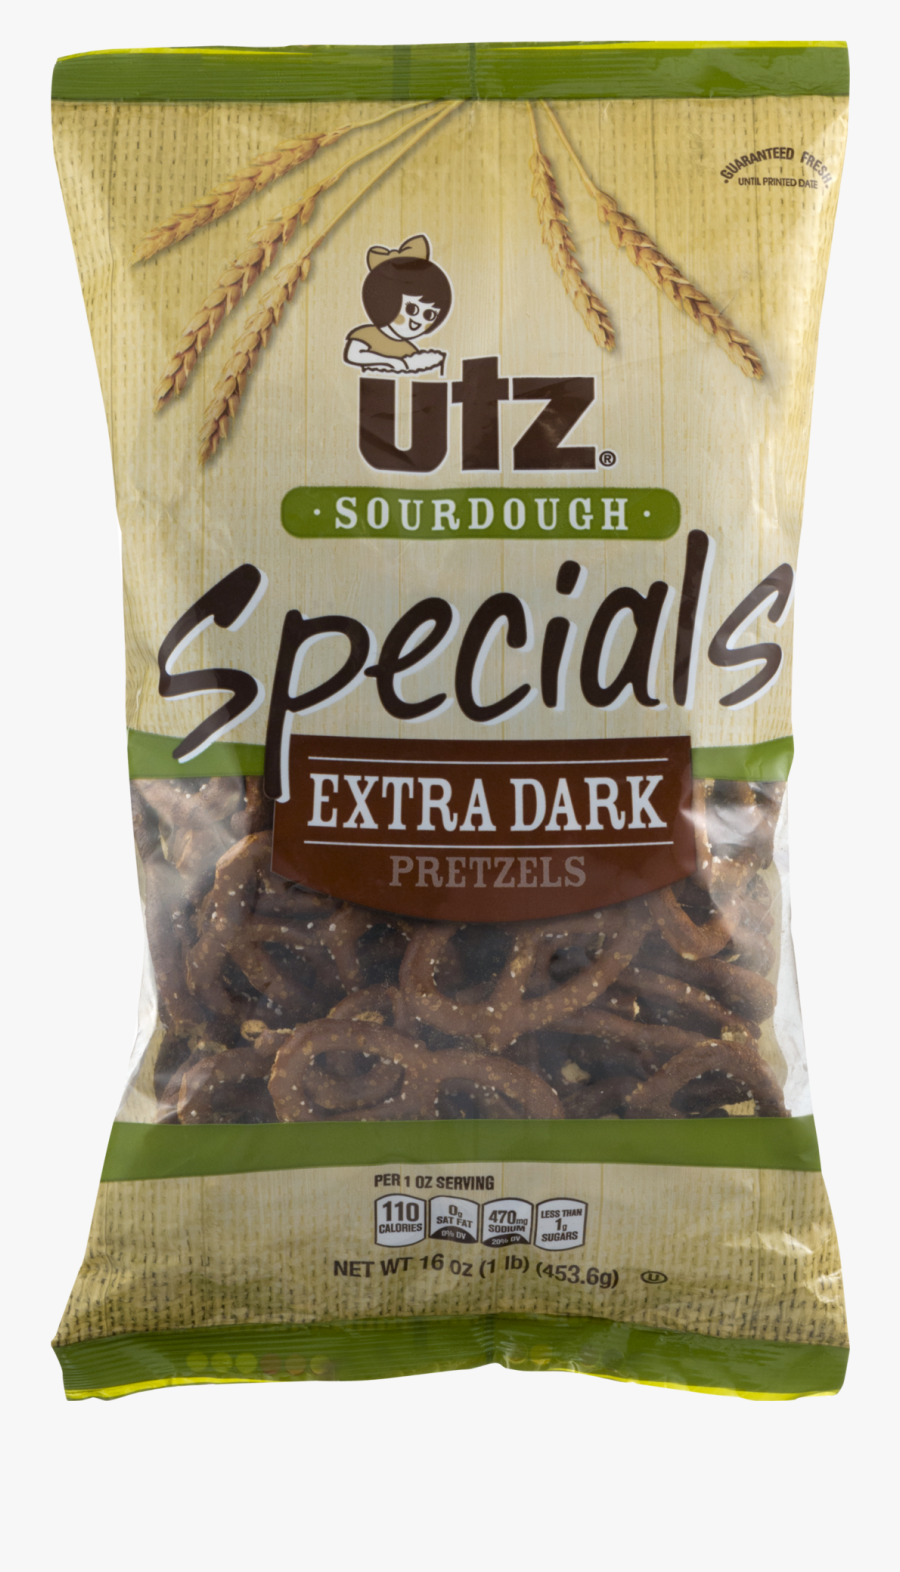 Utz Extra Dark Sourdough Pretzels - Utz Sourdough Specials Extra Dark Pretzels, Transparent Clipart